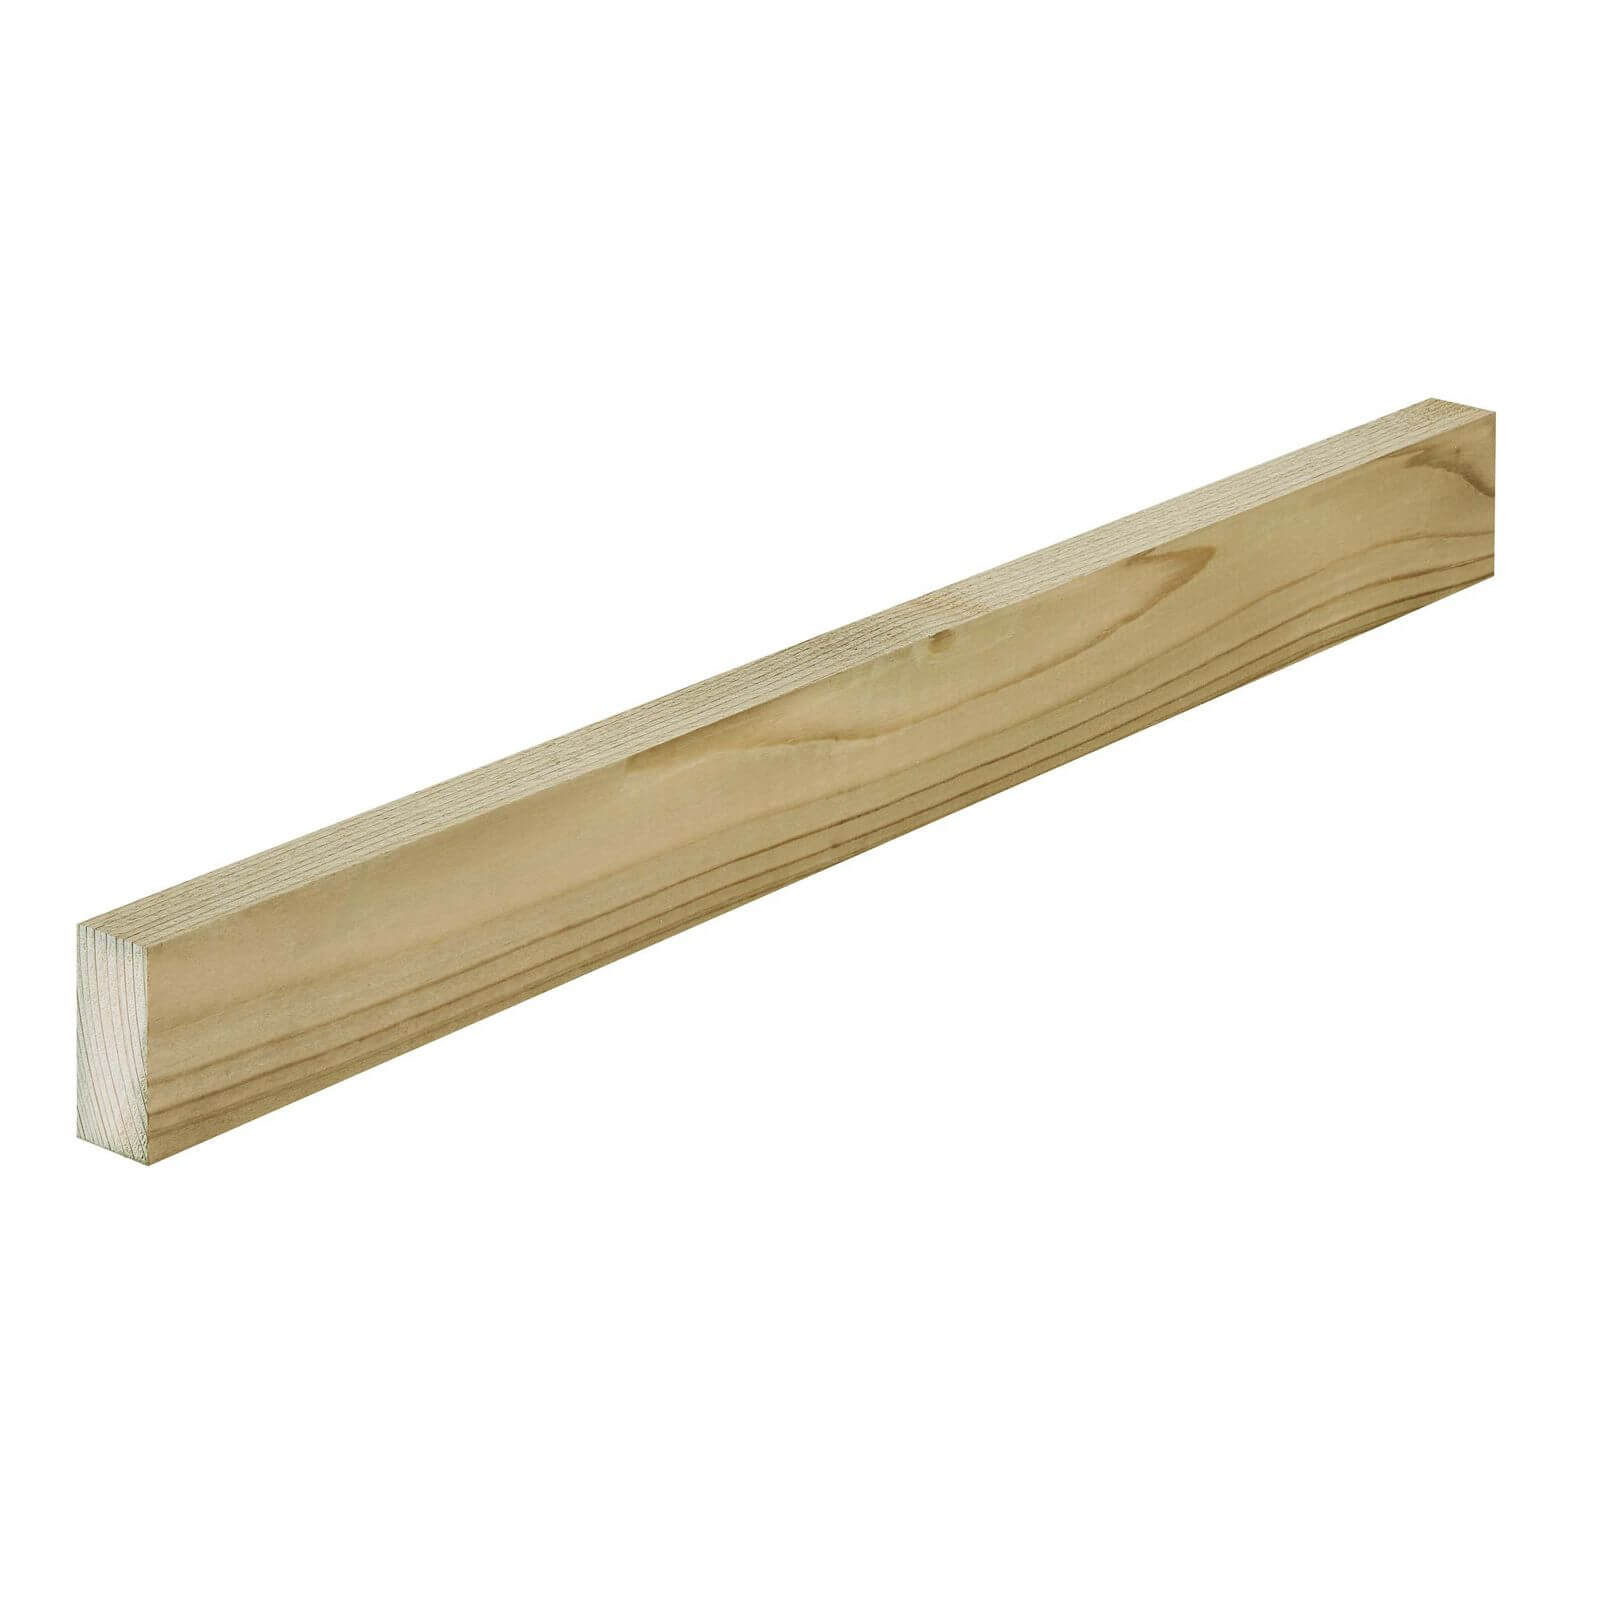 Photo of Metsa Sawn Treated Stick Softwood Timber 2.4m -22mm X 50mm X 2400mm-